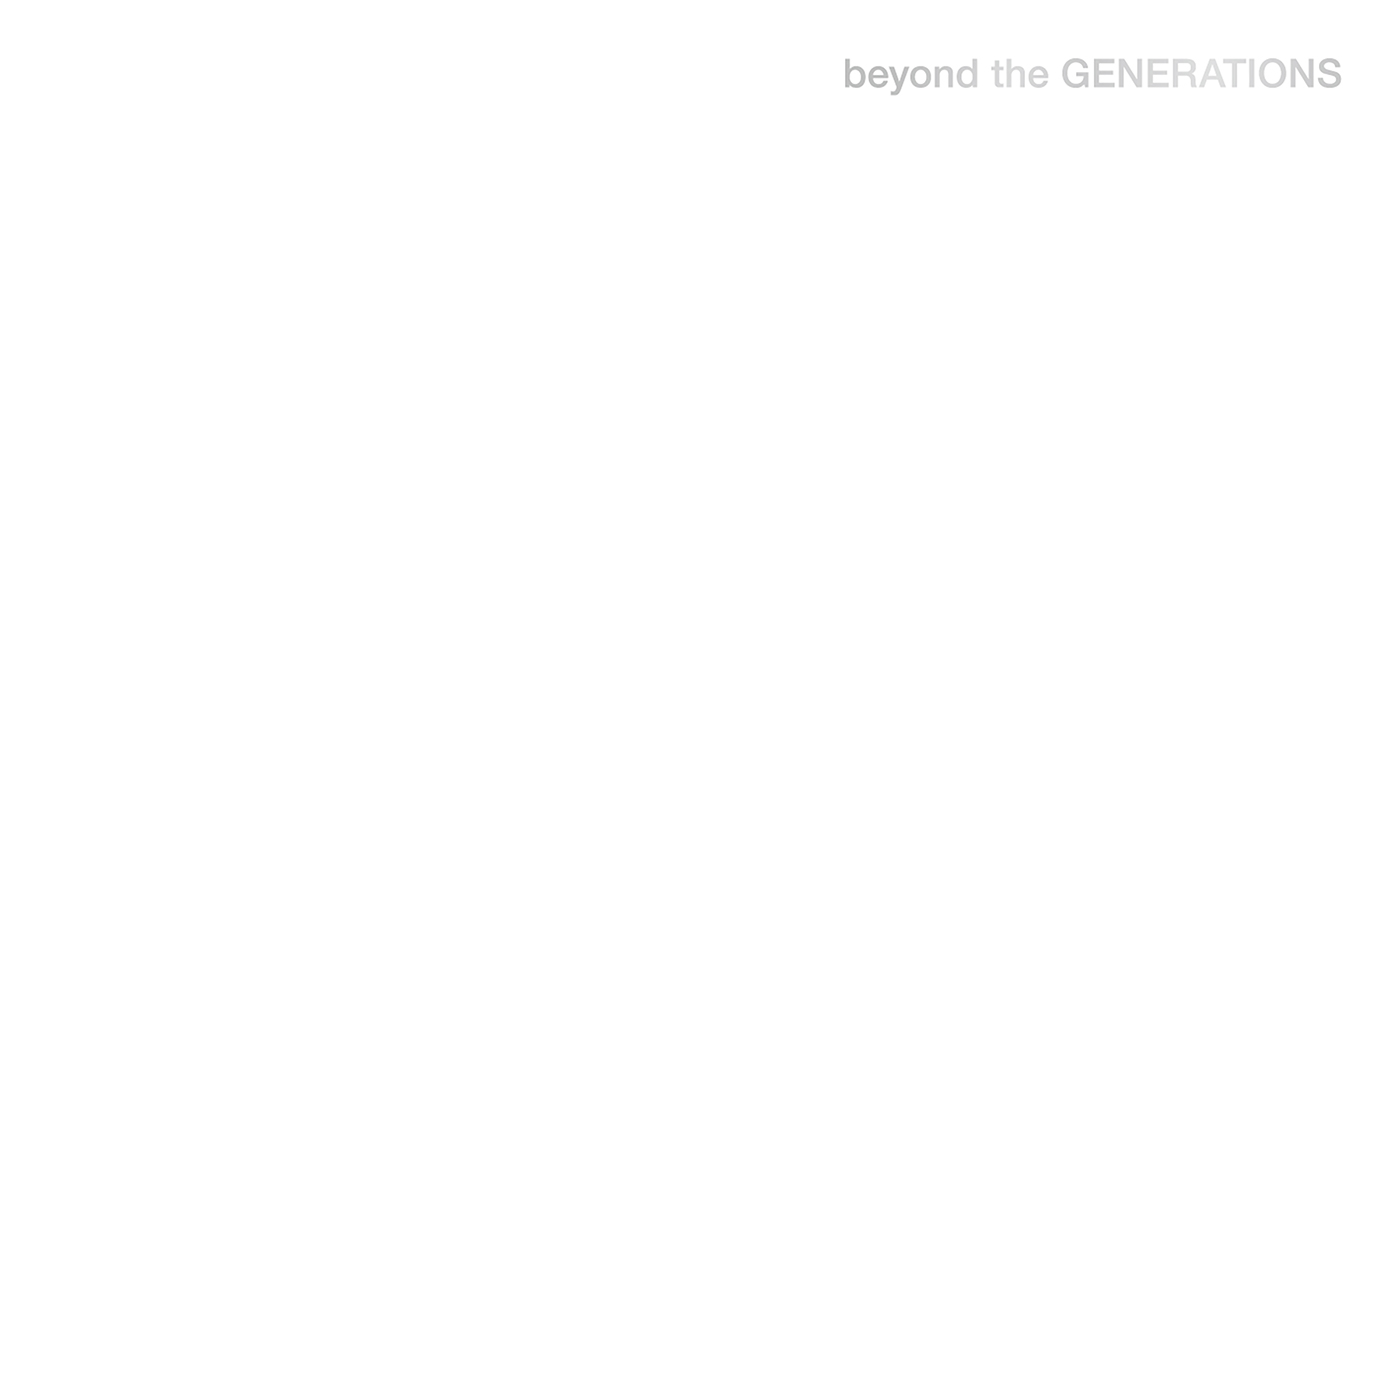 GENERATIONSデビュー記念日に新作『beyond the GENERATIONS』をリリース！ 片寄涼太、数原龍友のソロ楽曲も収録 - 画像一覧（1/3）